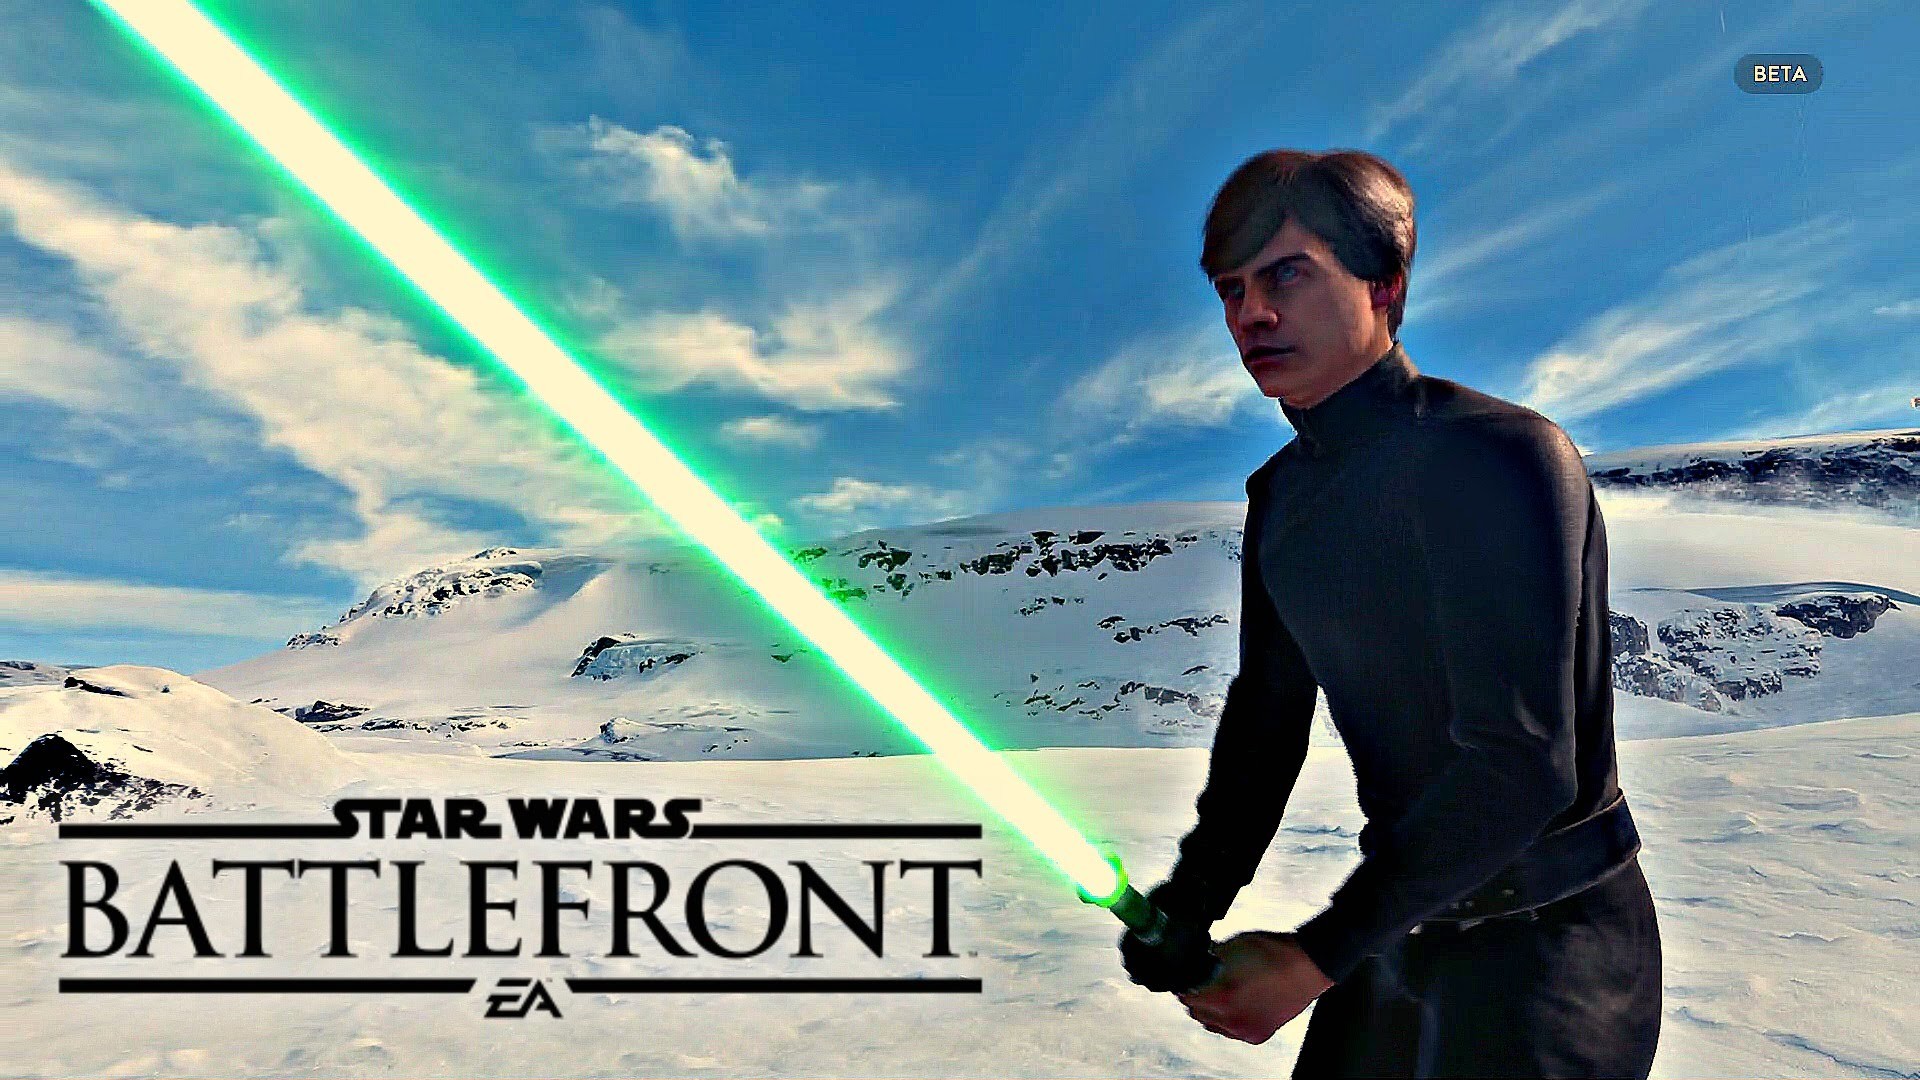 Star Wars Battlefront Walker Assault – LUKE SKYWALKER Ps4 / Xbox One Beta Gameplay 1080p HD – YouTube